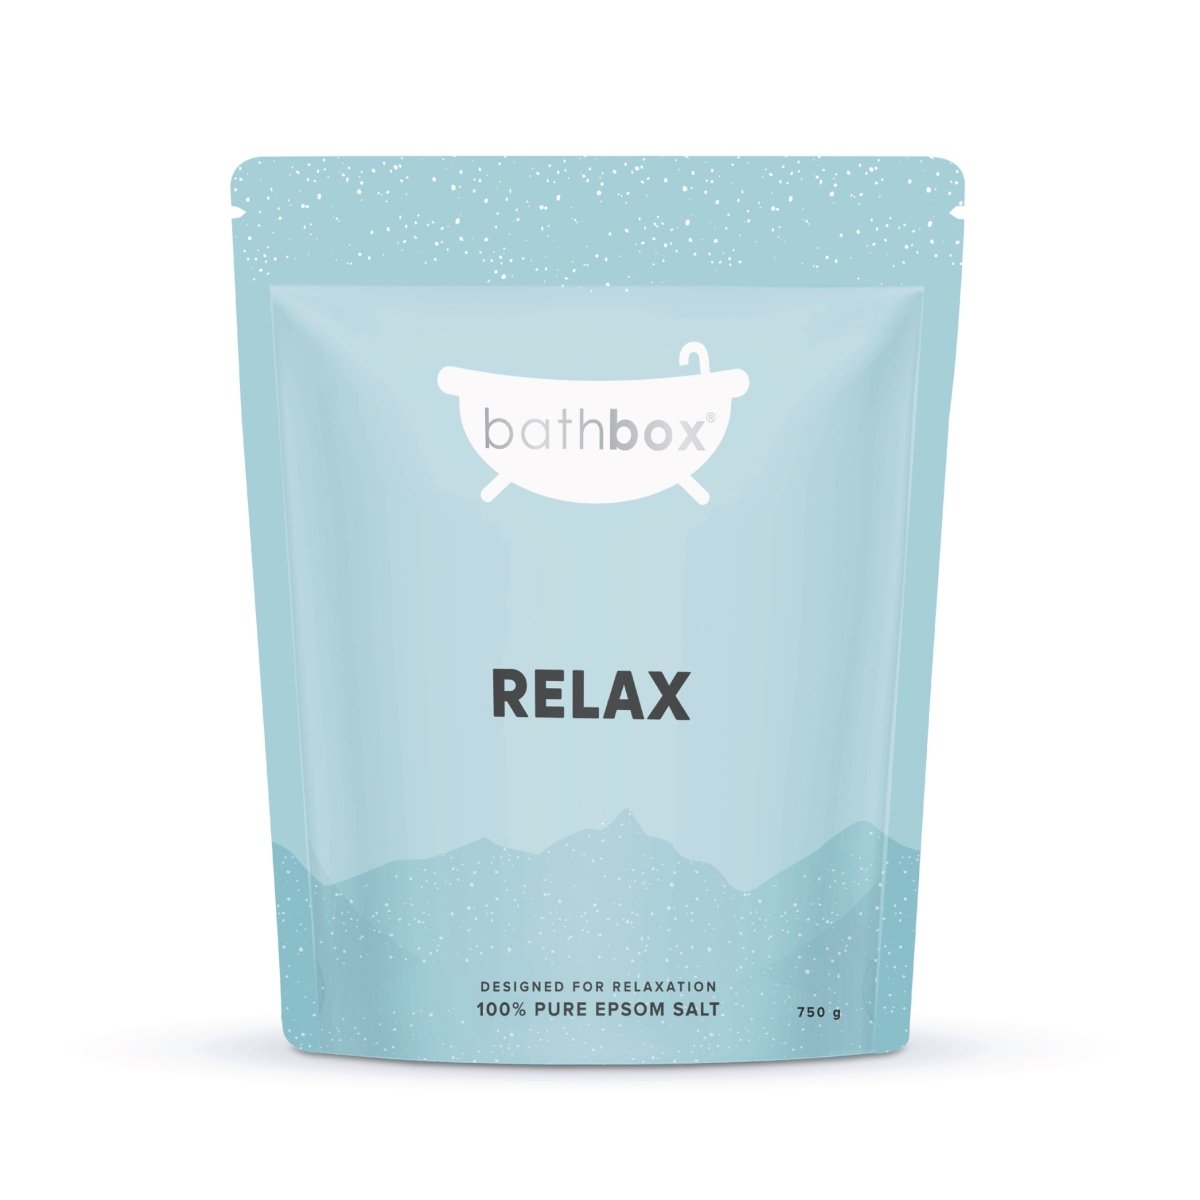 Relaxing & De-Stress Bath Gift Set - Bath Pillow & Caddy, Bath Bombs, Salts & Soaks - Made in Australia by Bath Box